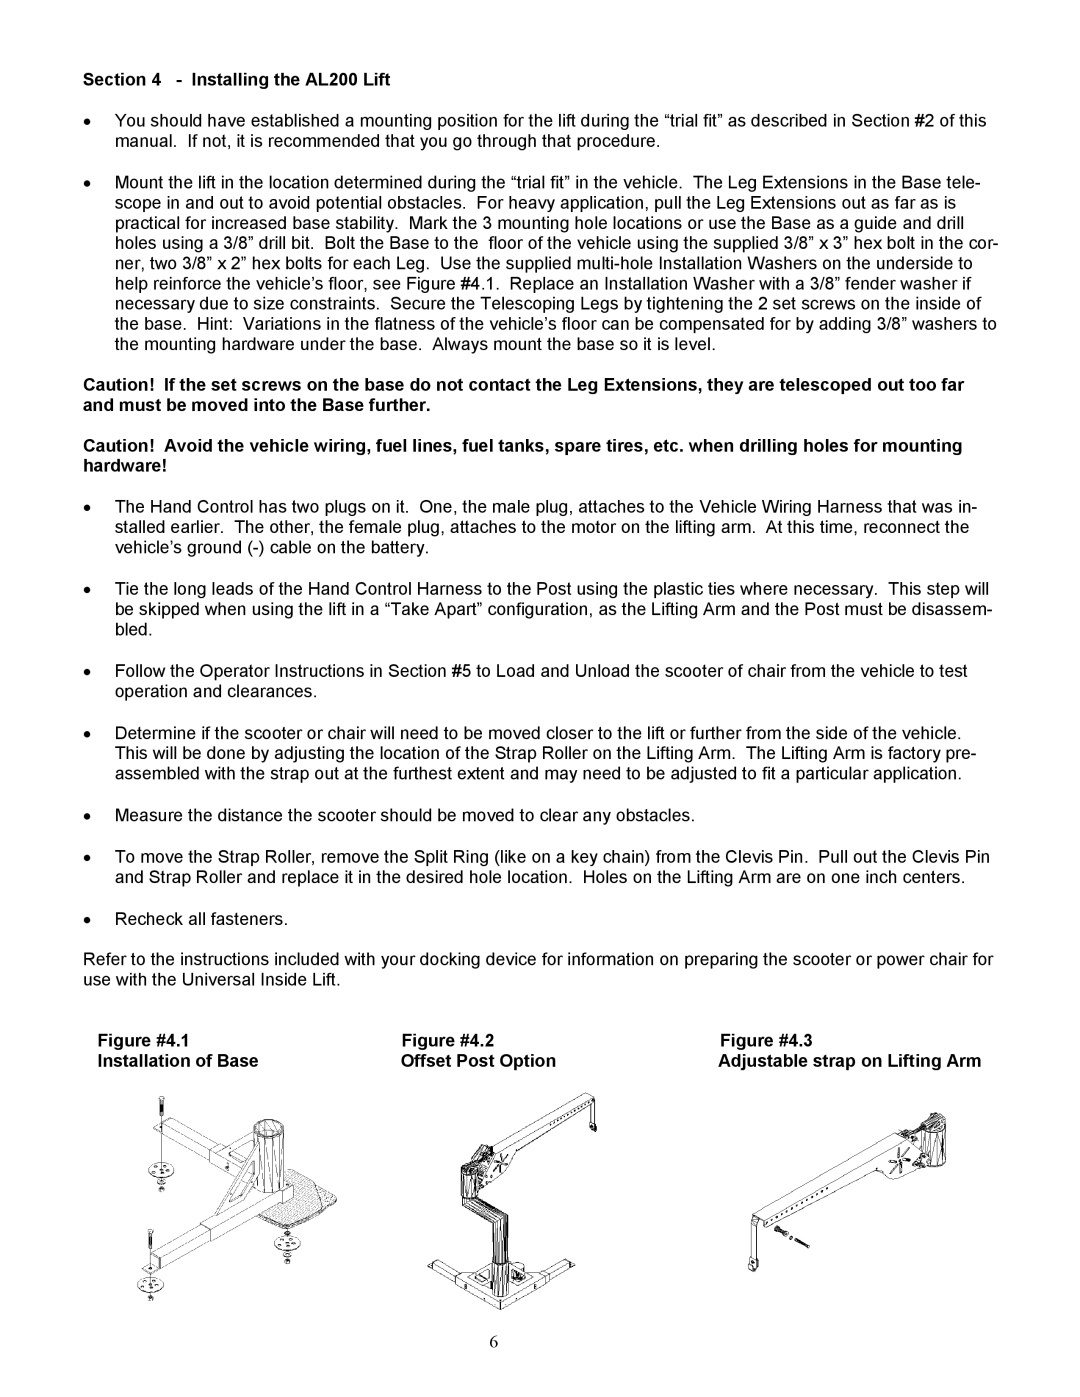 Harmar Mobility AL400, AL055 manual Installing the AL200 Lift, Figure #4.1, Figure #4.2, Figure #4.3, Installation of Base 